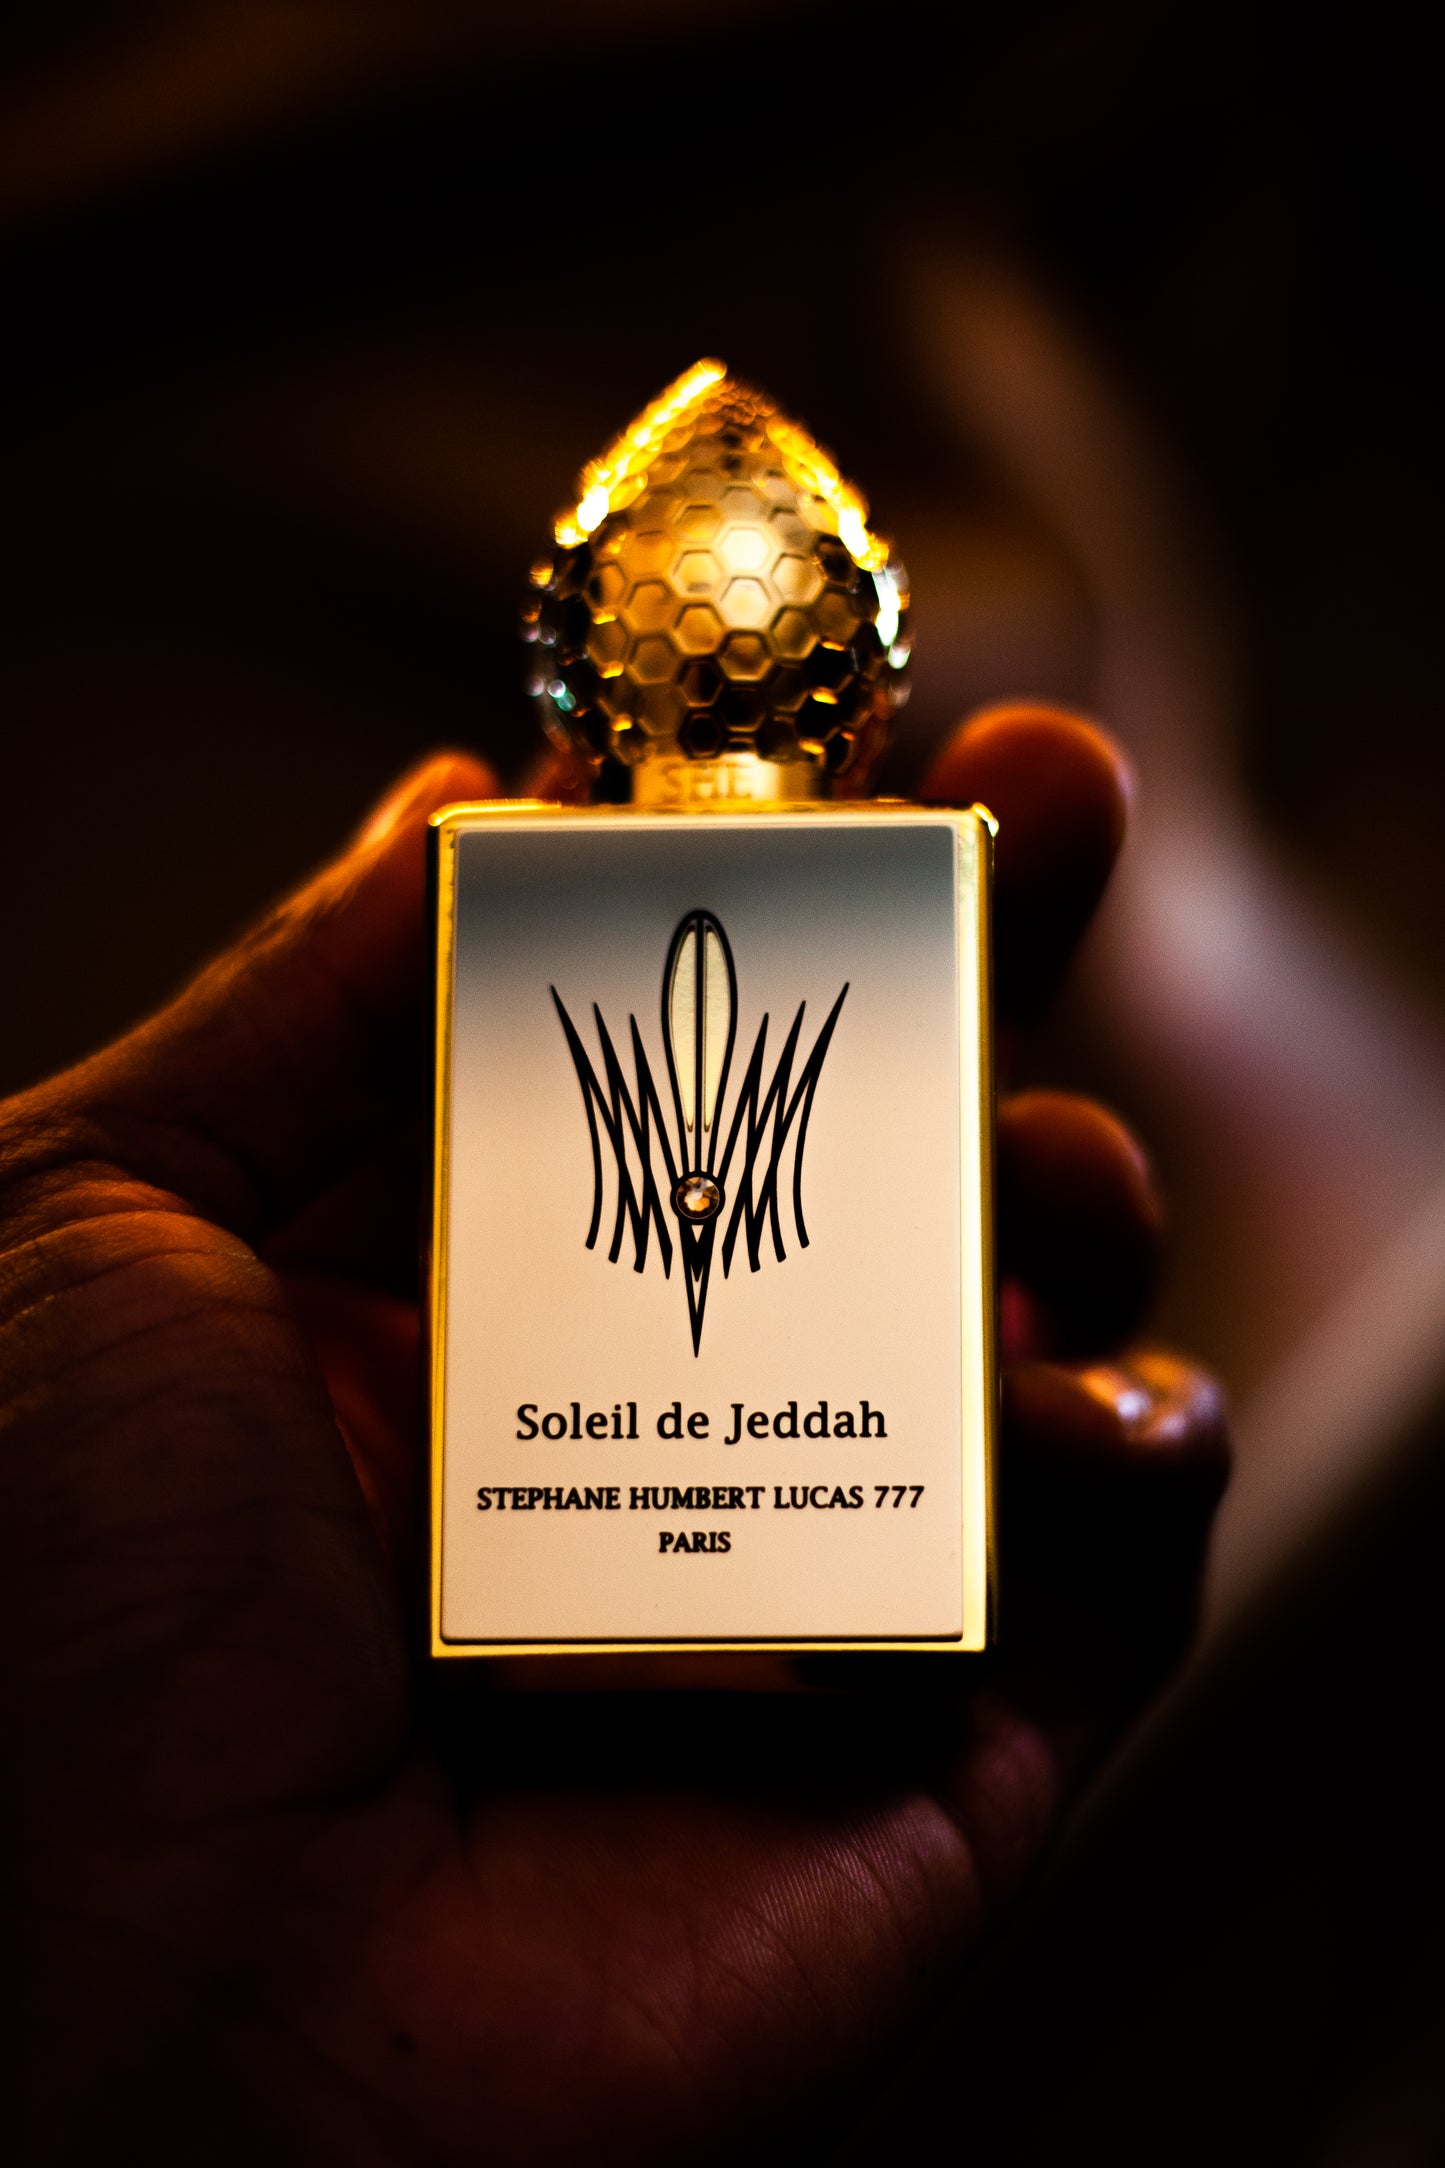 Soleil de Jeddah L'Original Stéphane Humbert Lucas - Tuxedo.no Niche Perfumes - Oslo Norway ON DEMAND BARBERS